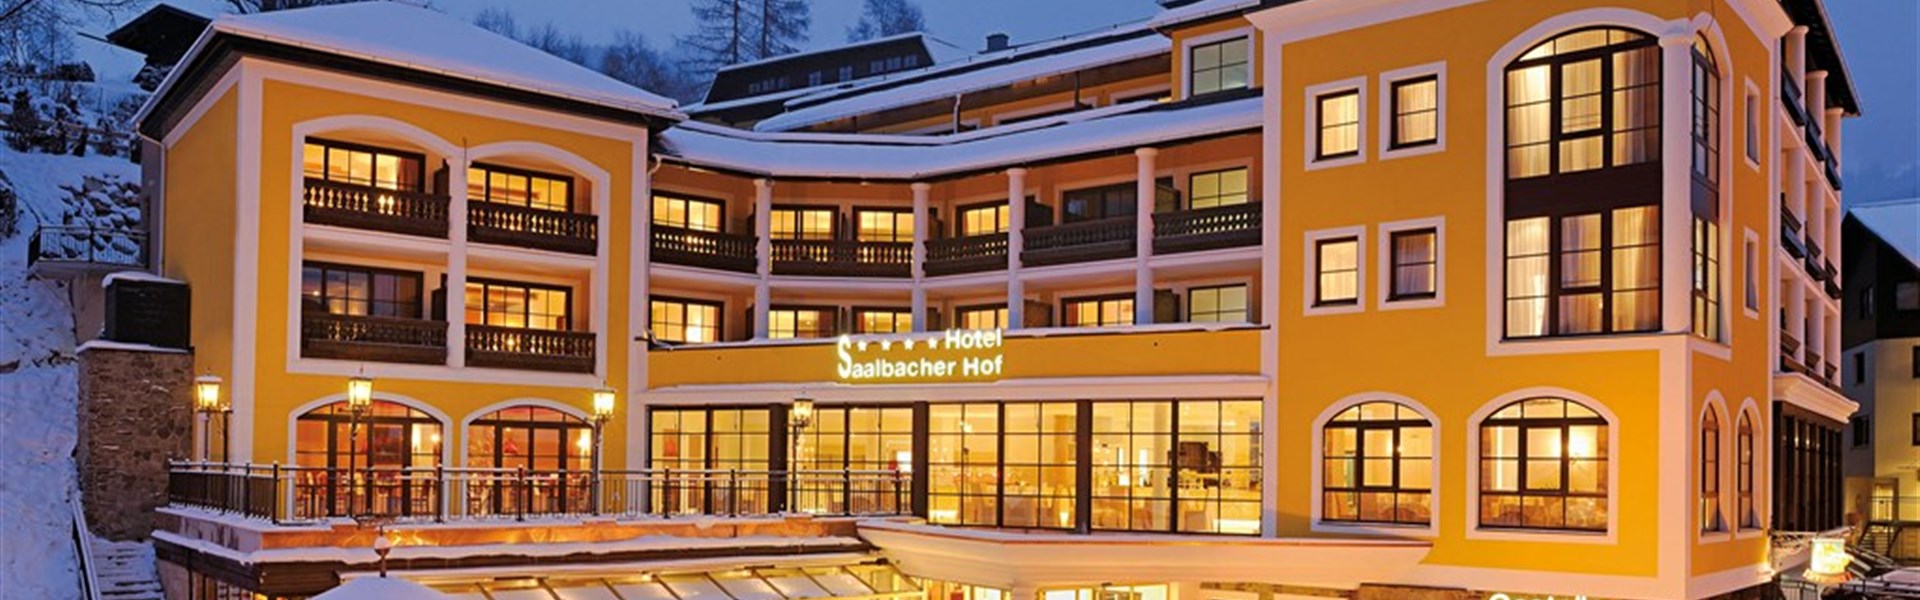 Hotel Saalbacher Hof (W) - 